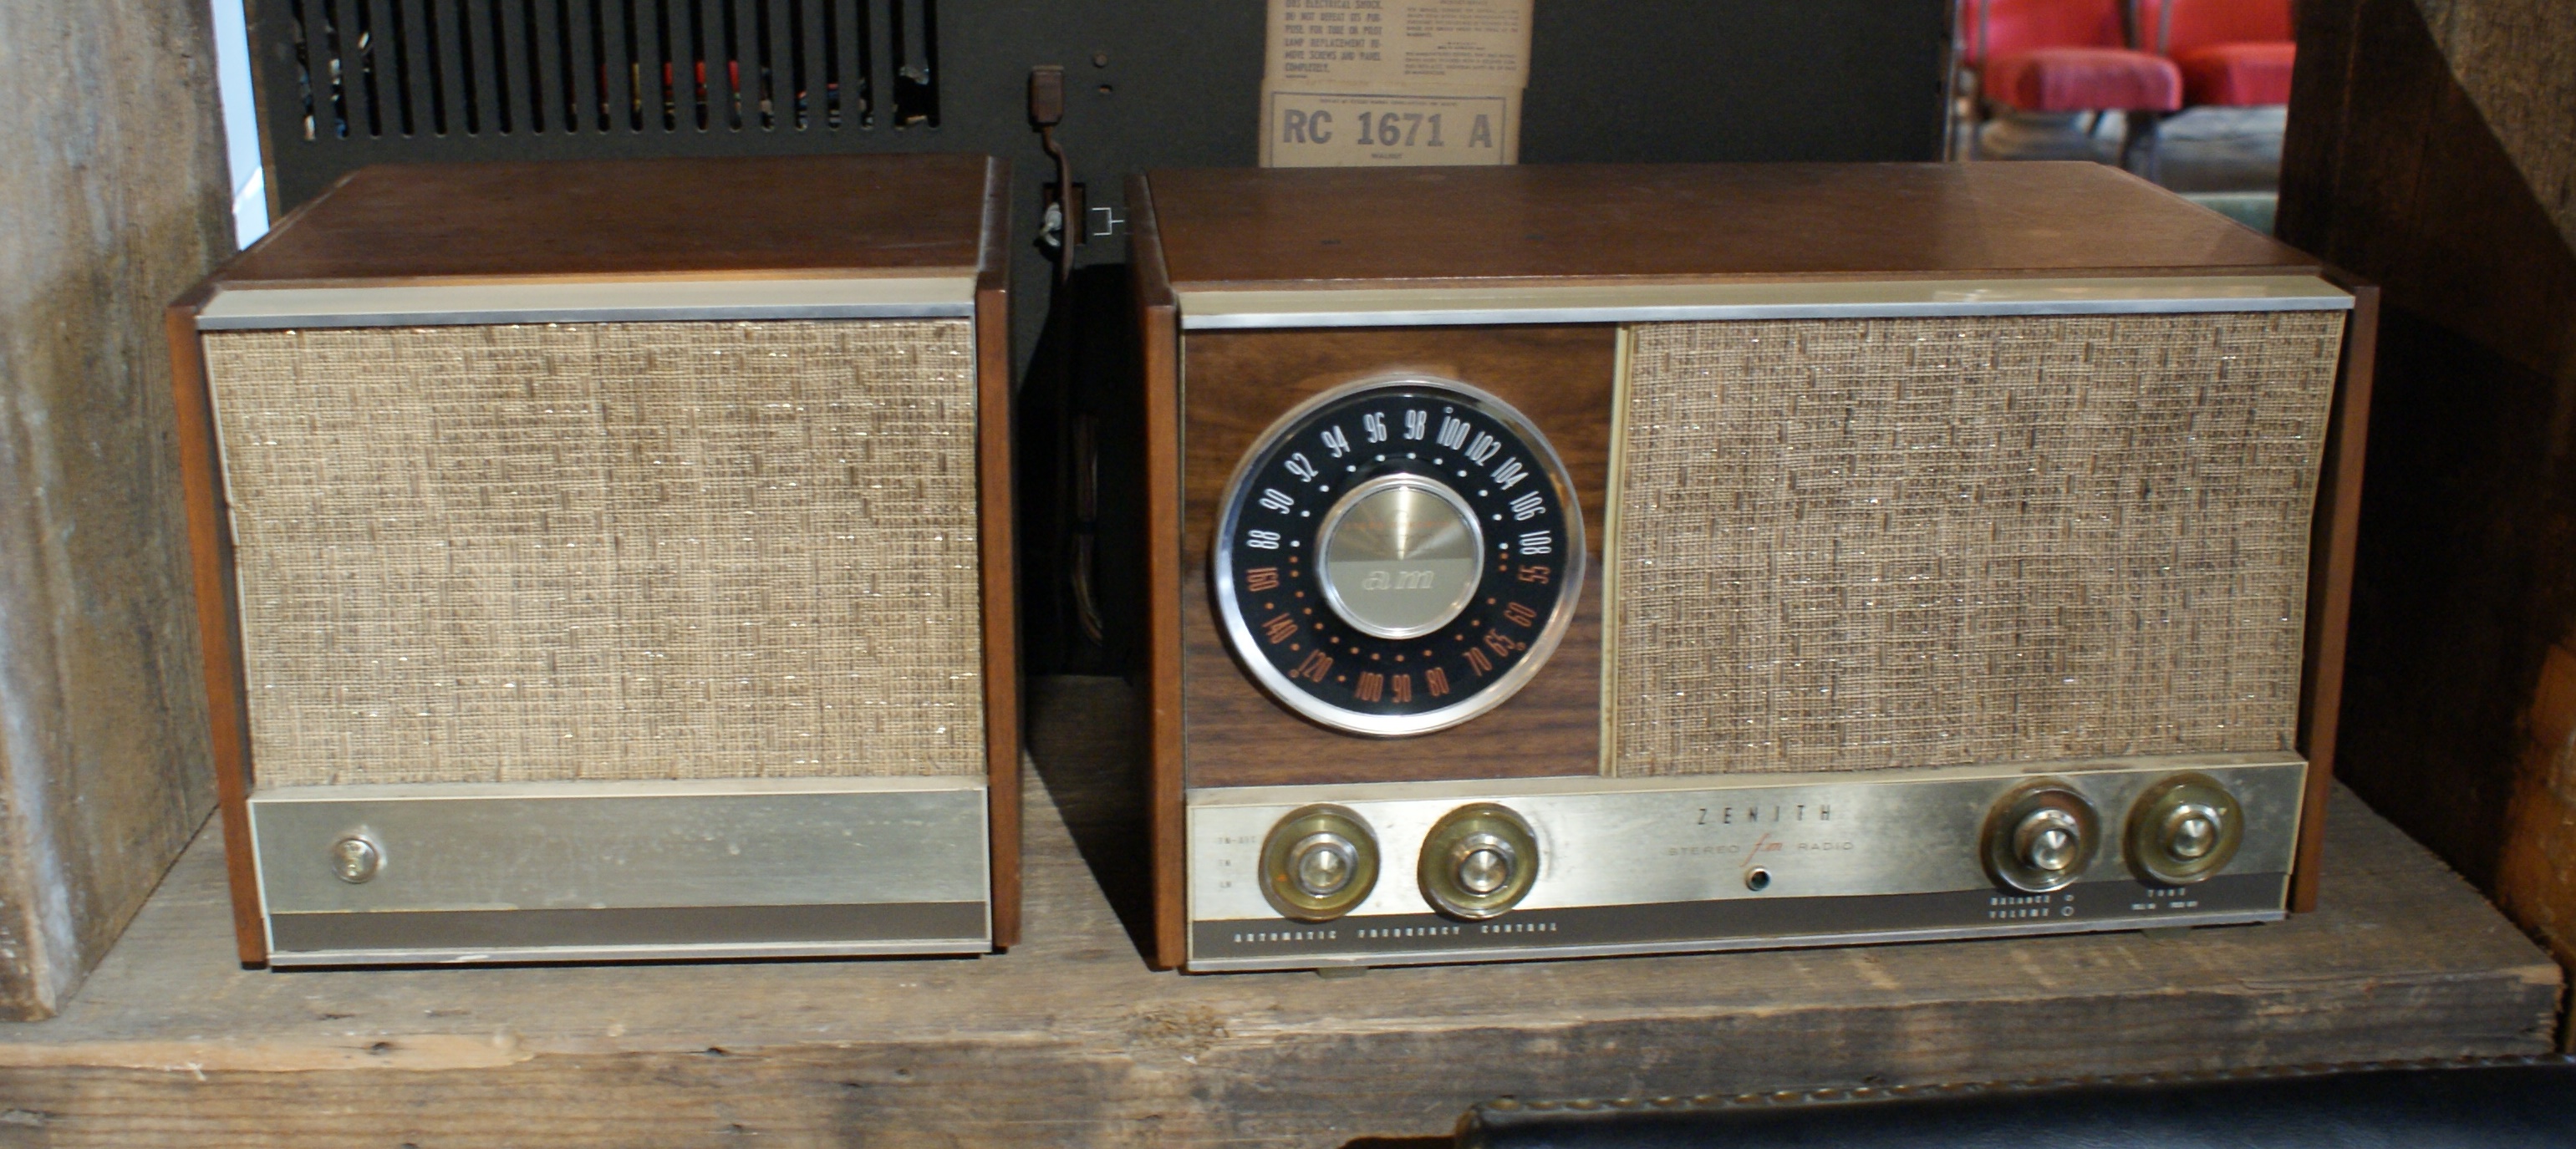 Sale zenith for vintage radios communitymedia.sciencecareers.org